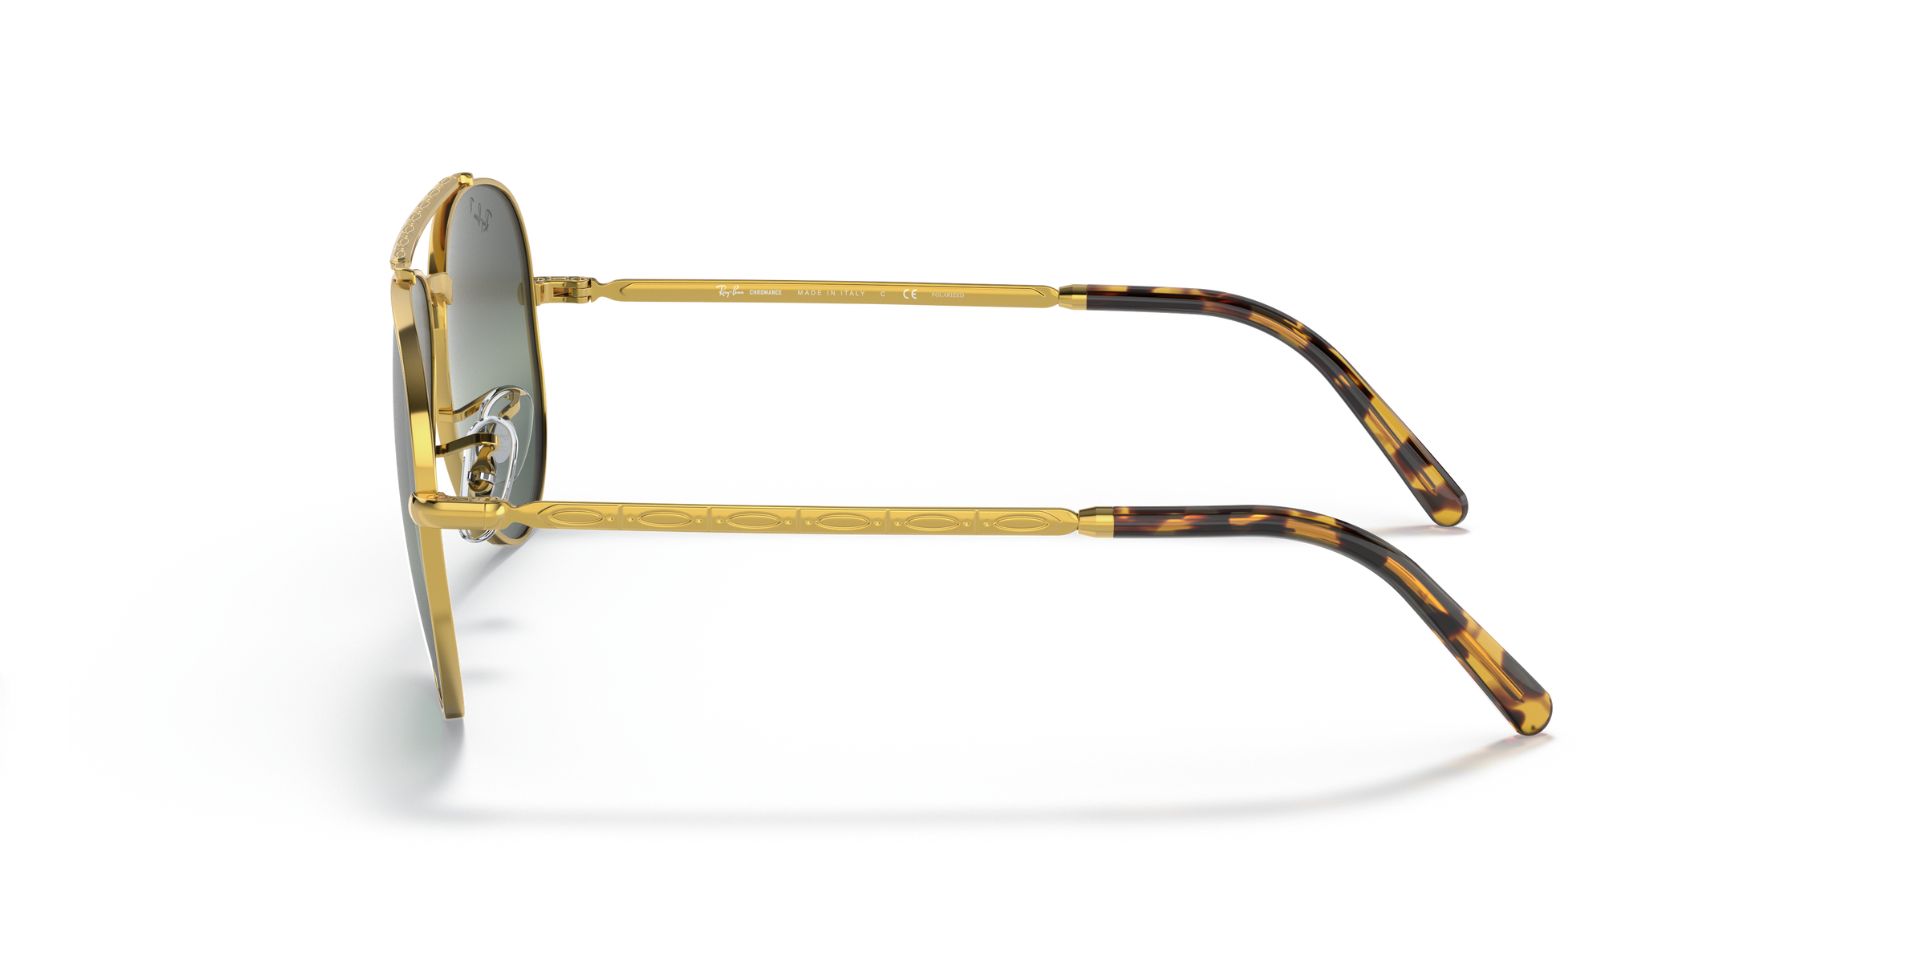 Ray-Ban NEW AVIATOR UNISEX - Sunglasses - silver-coloured - Zalando.de